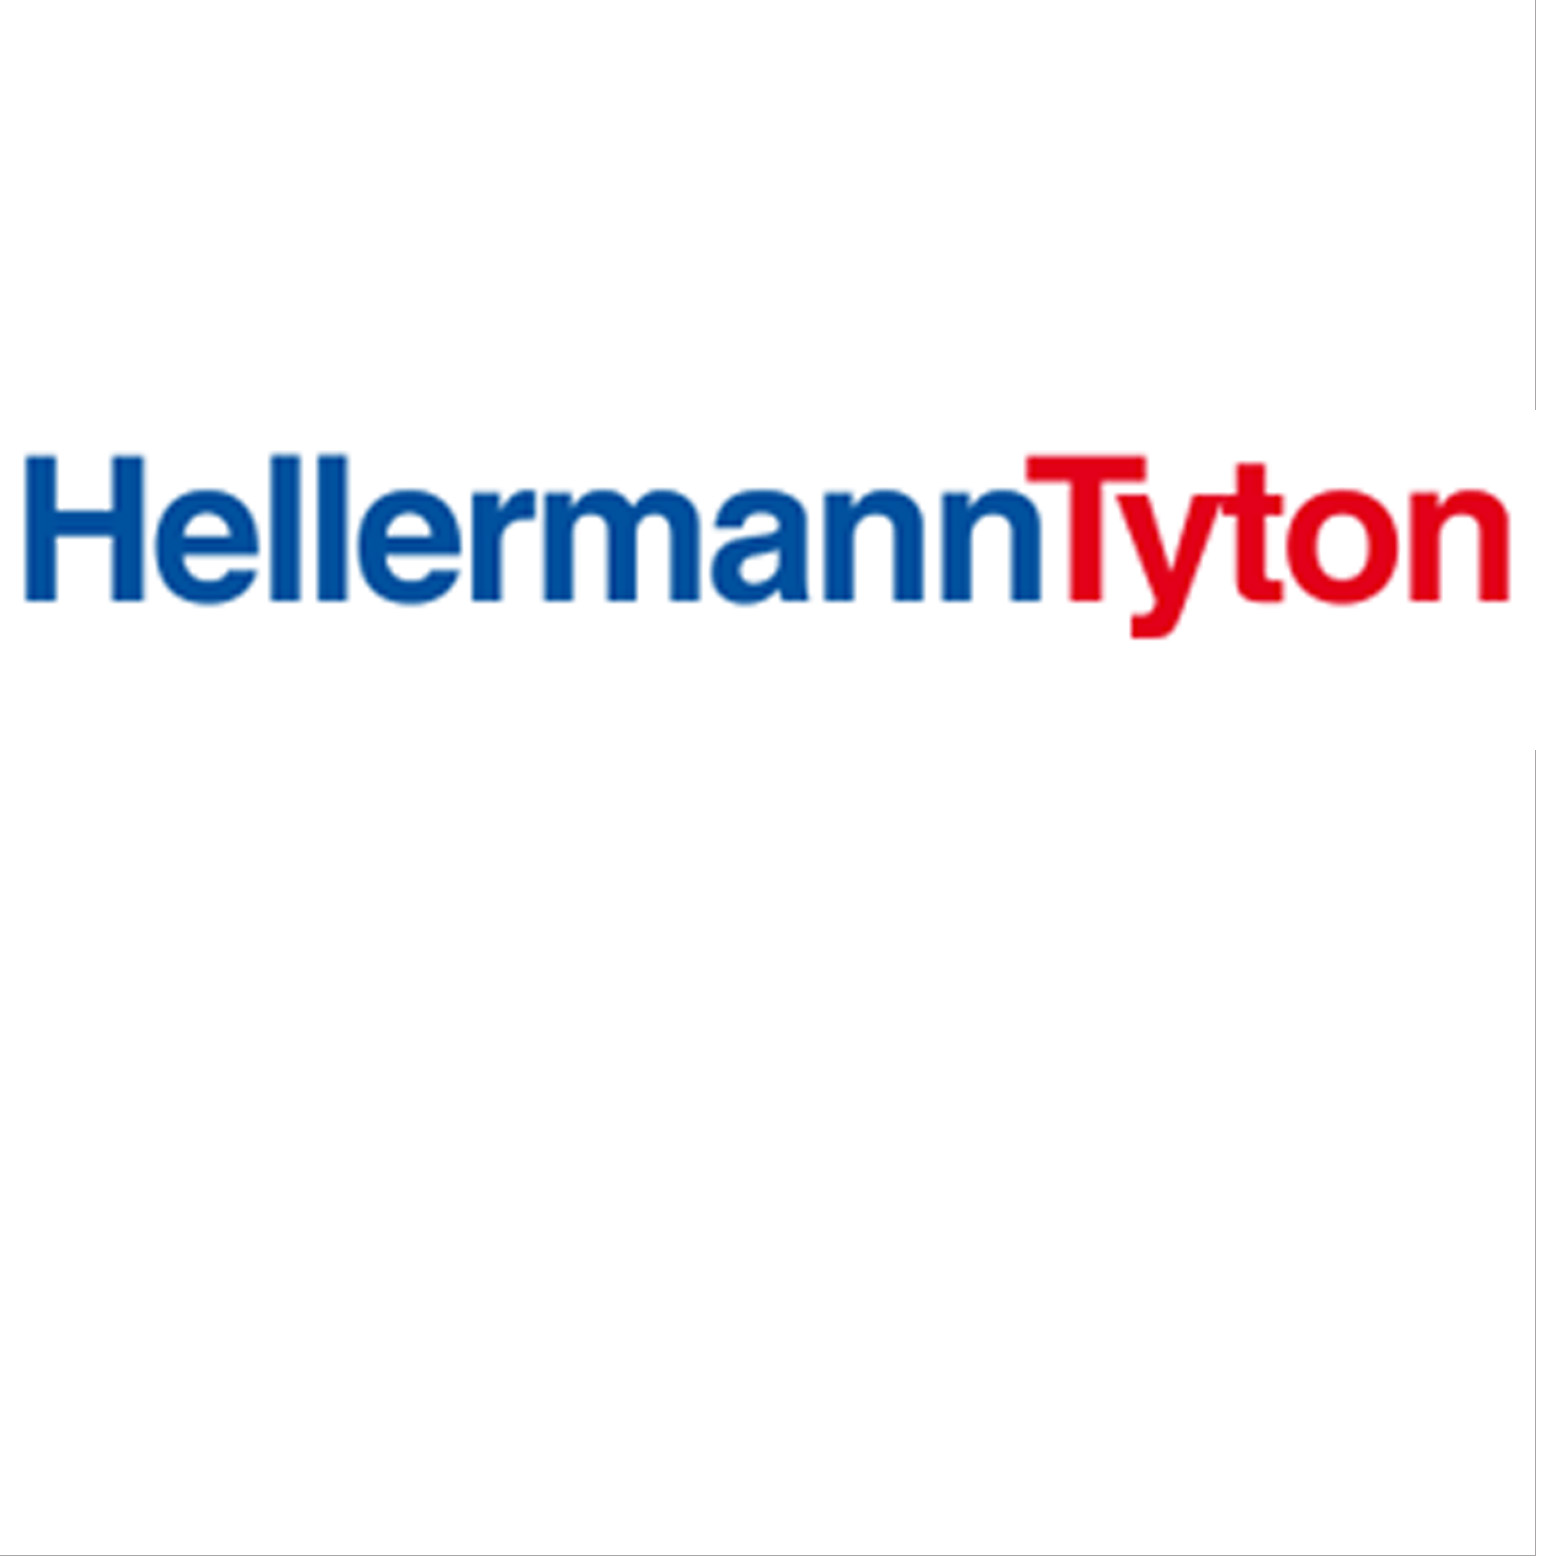 Hellermann Tyton Products